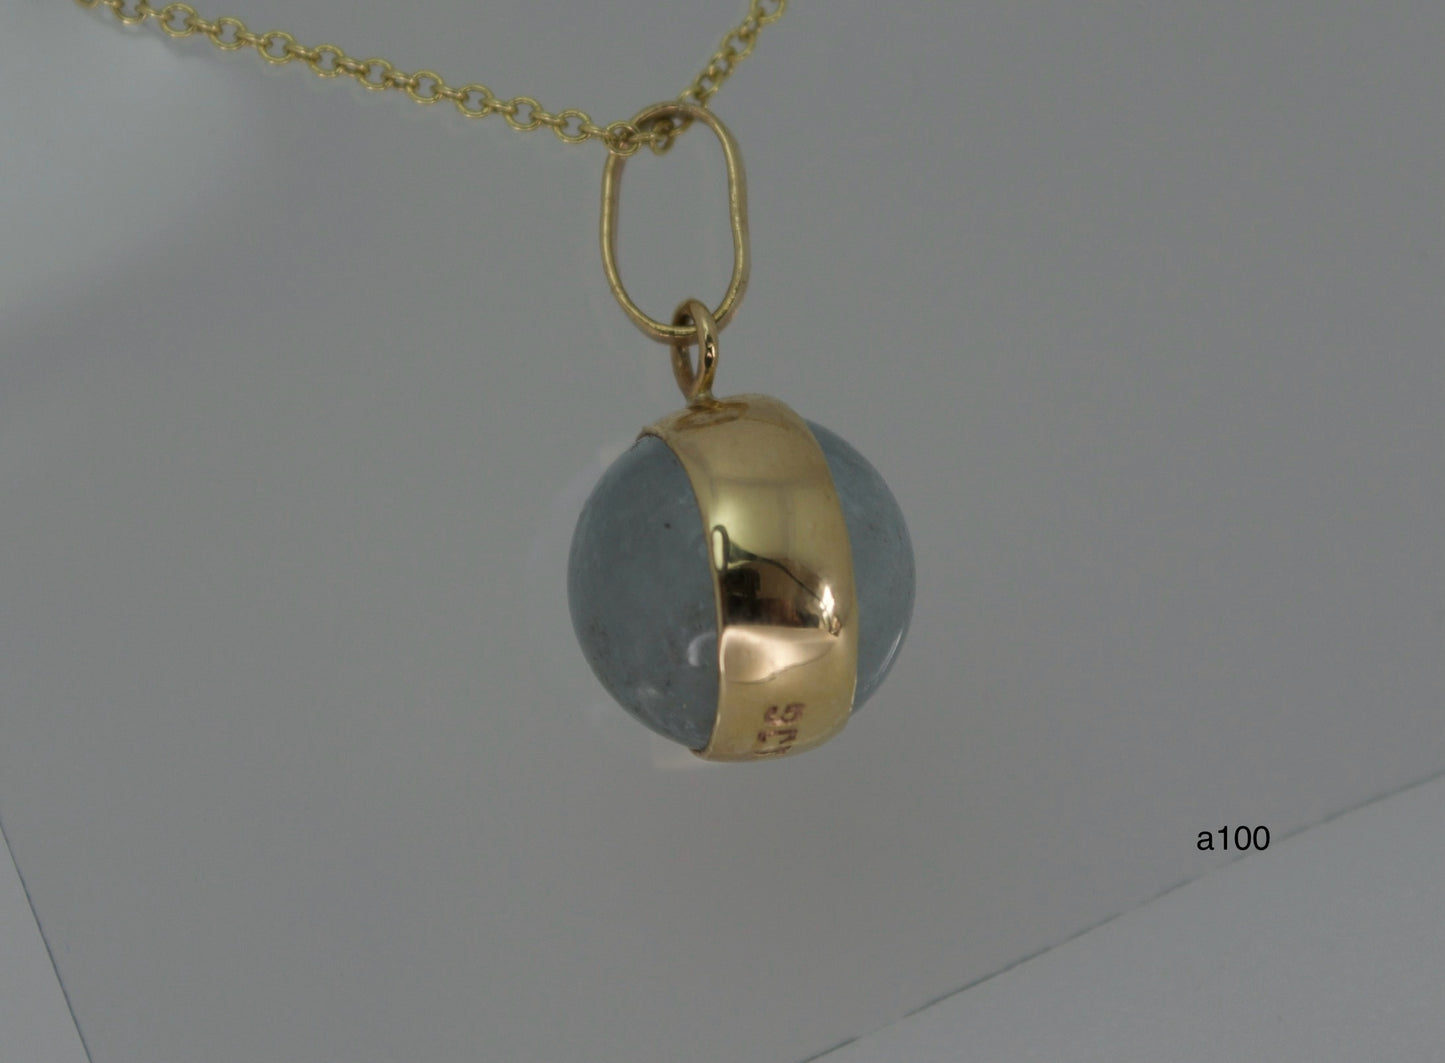 9ct gold aquamarine pendant, blue bell shape light blue gemstone, 18” chain uk hallmark